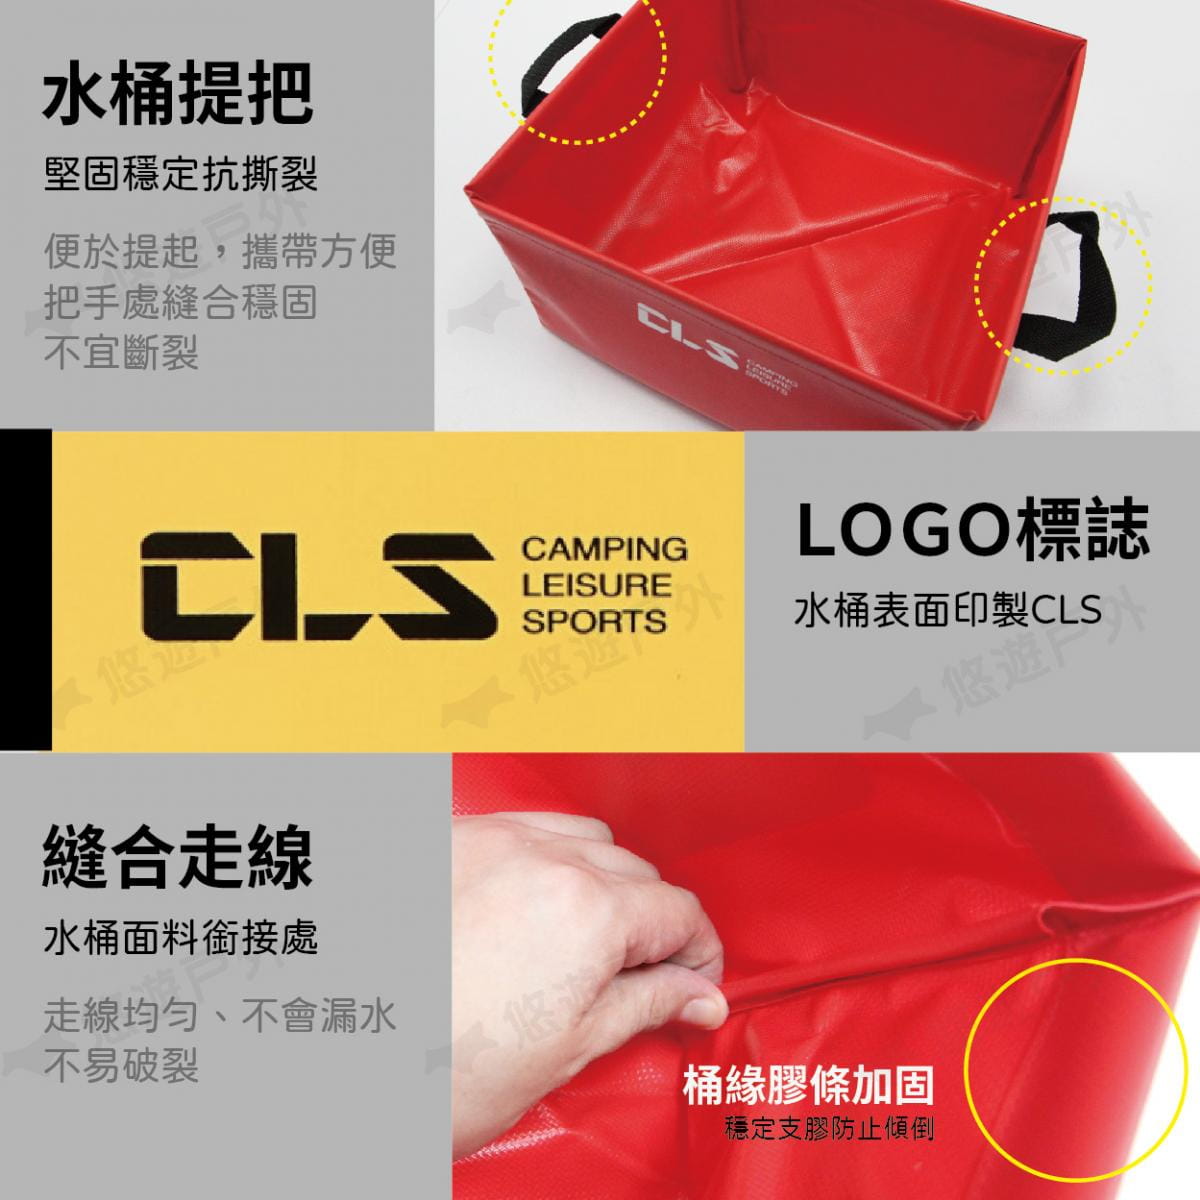 【CLS】韓國 戶外 多功能 方形折疊水桶 儲水盆 水袋 五色可選 13L 應急儲水 環保防水材質 4